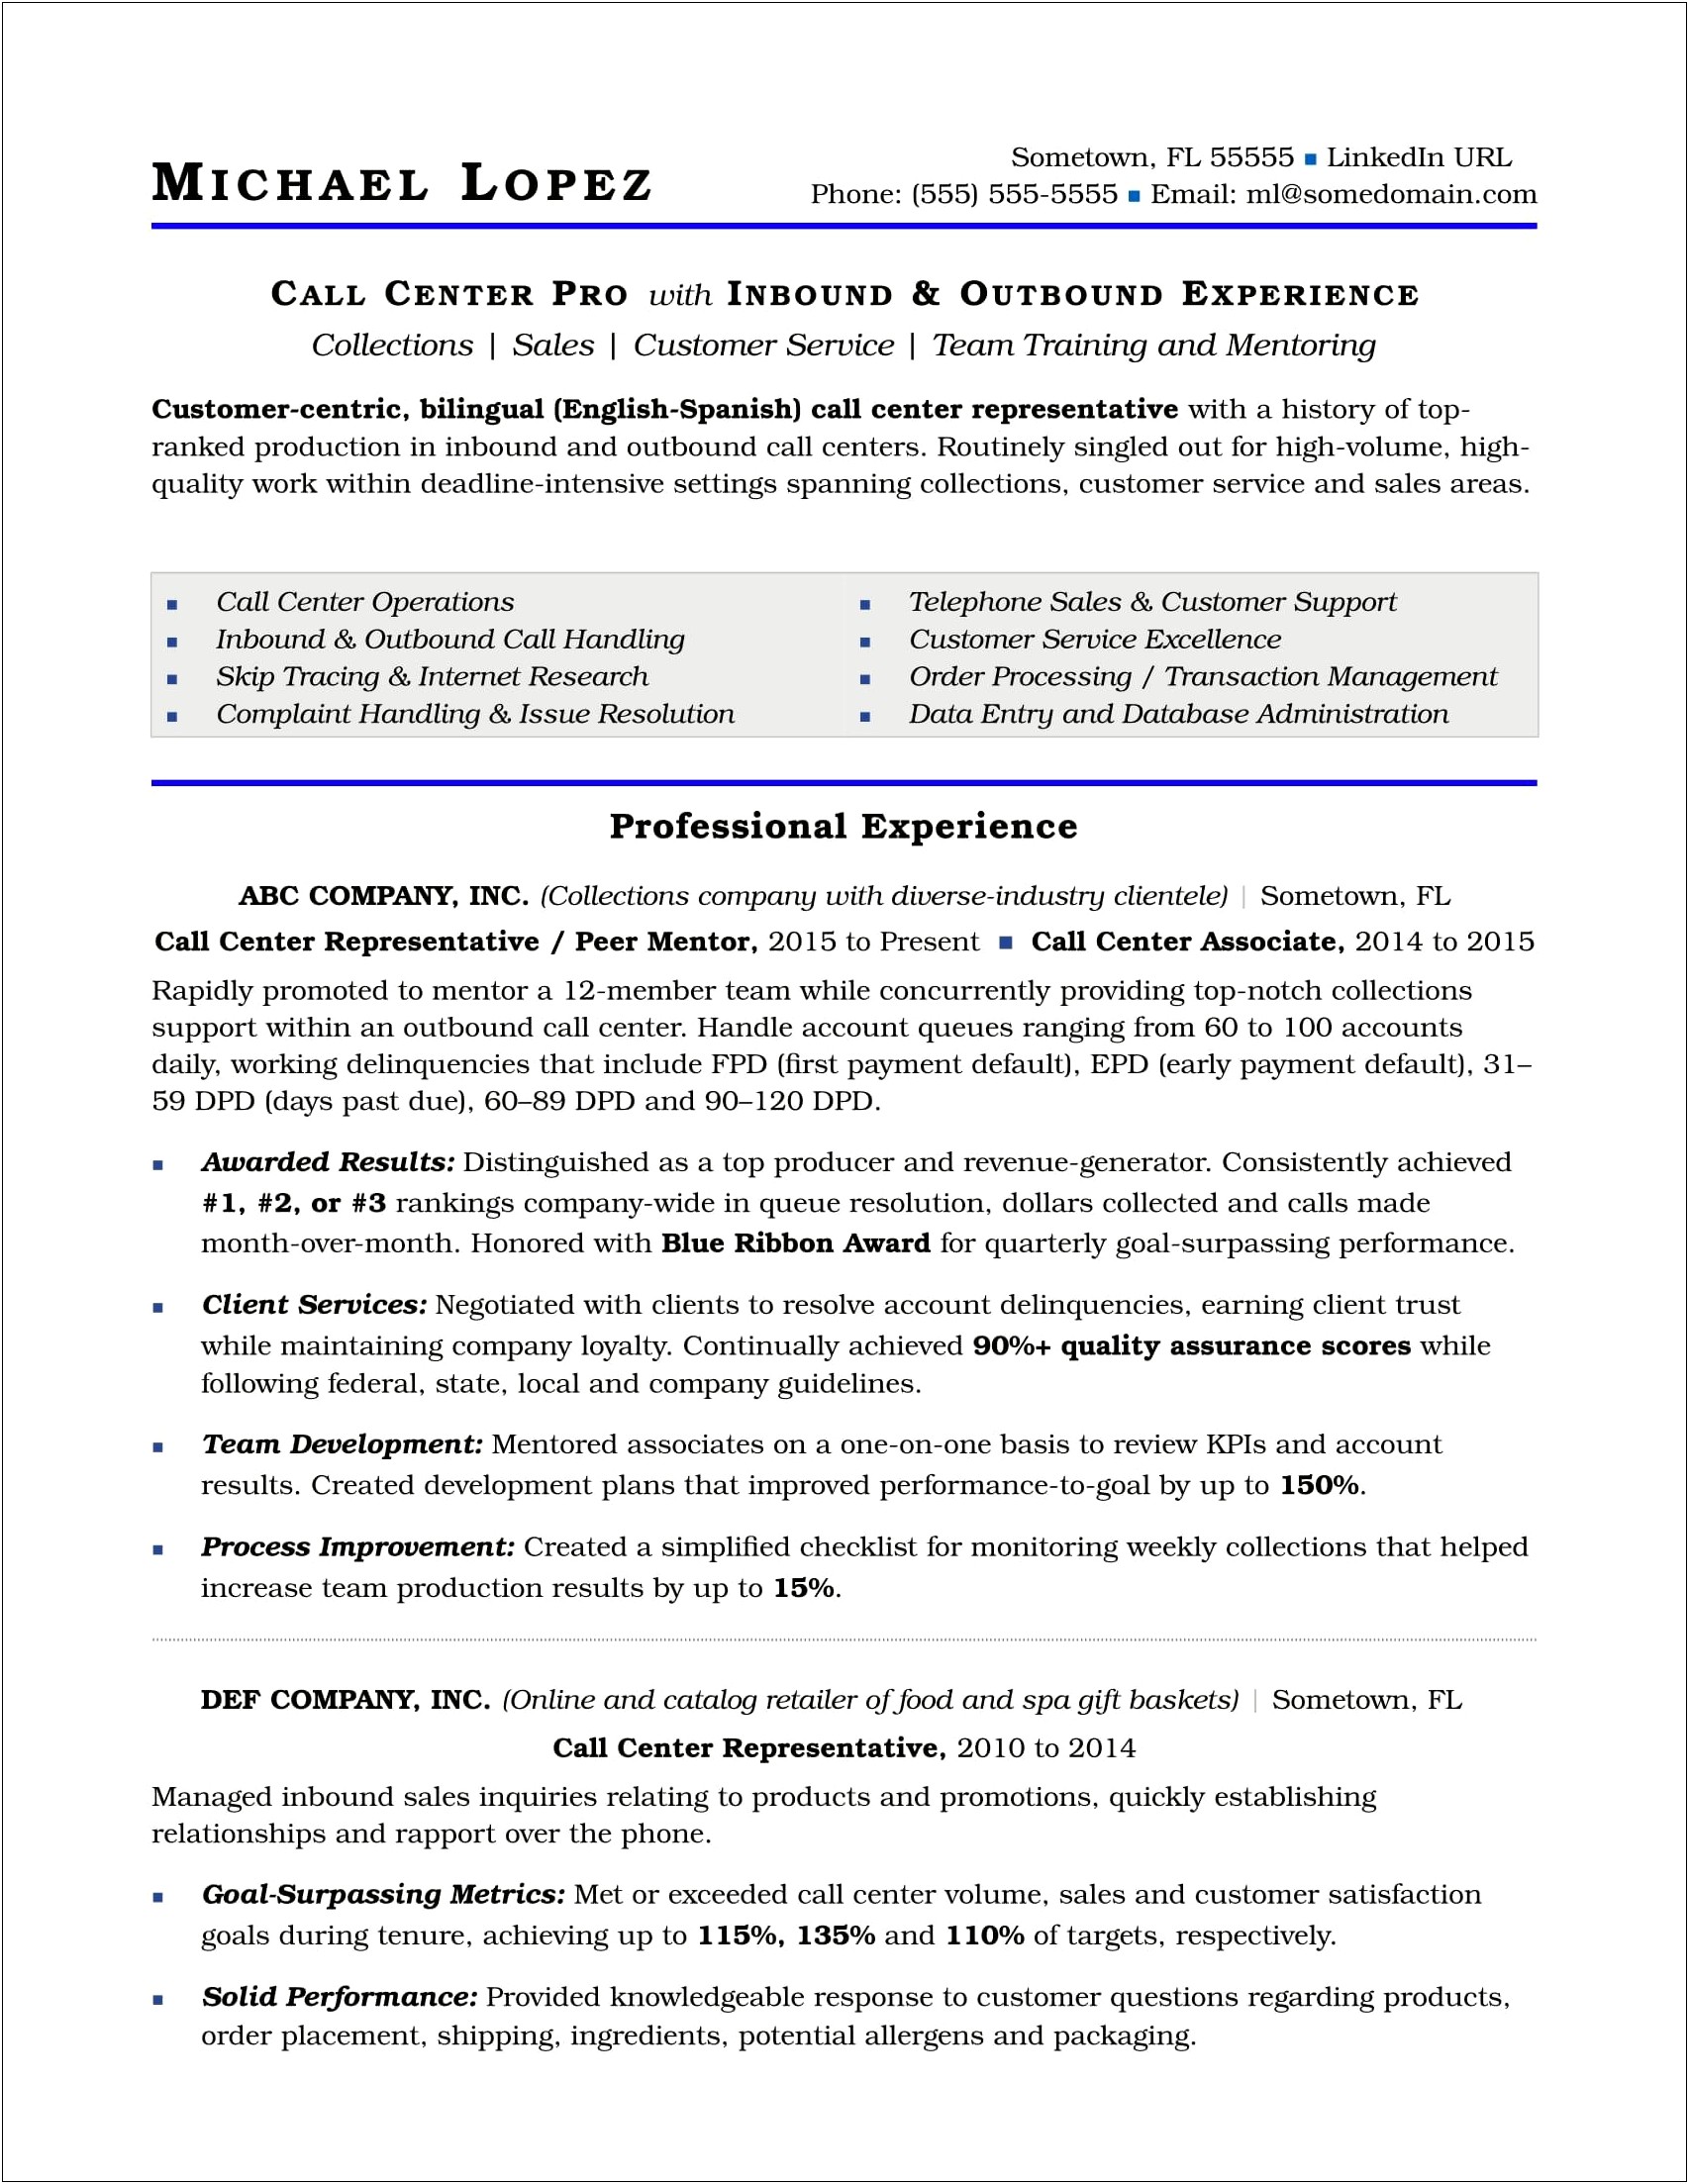 Resume Objective For Customer Service Associate